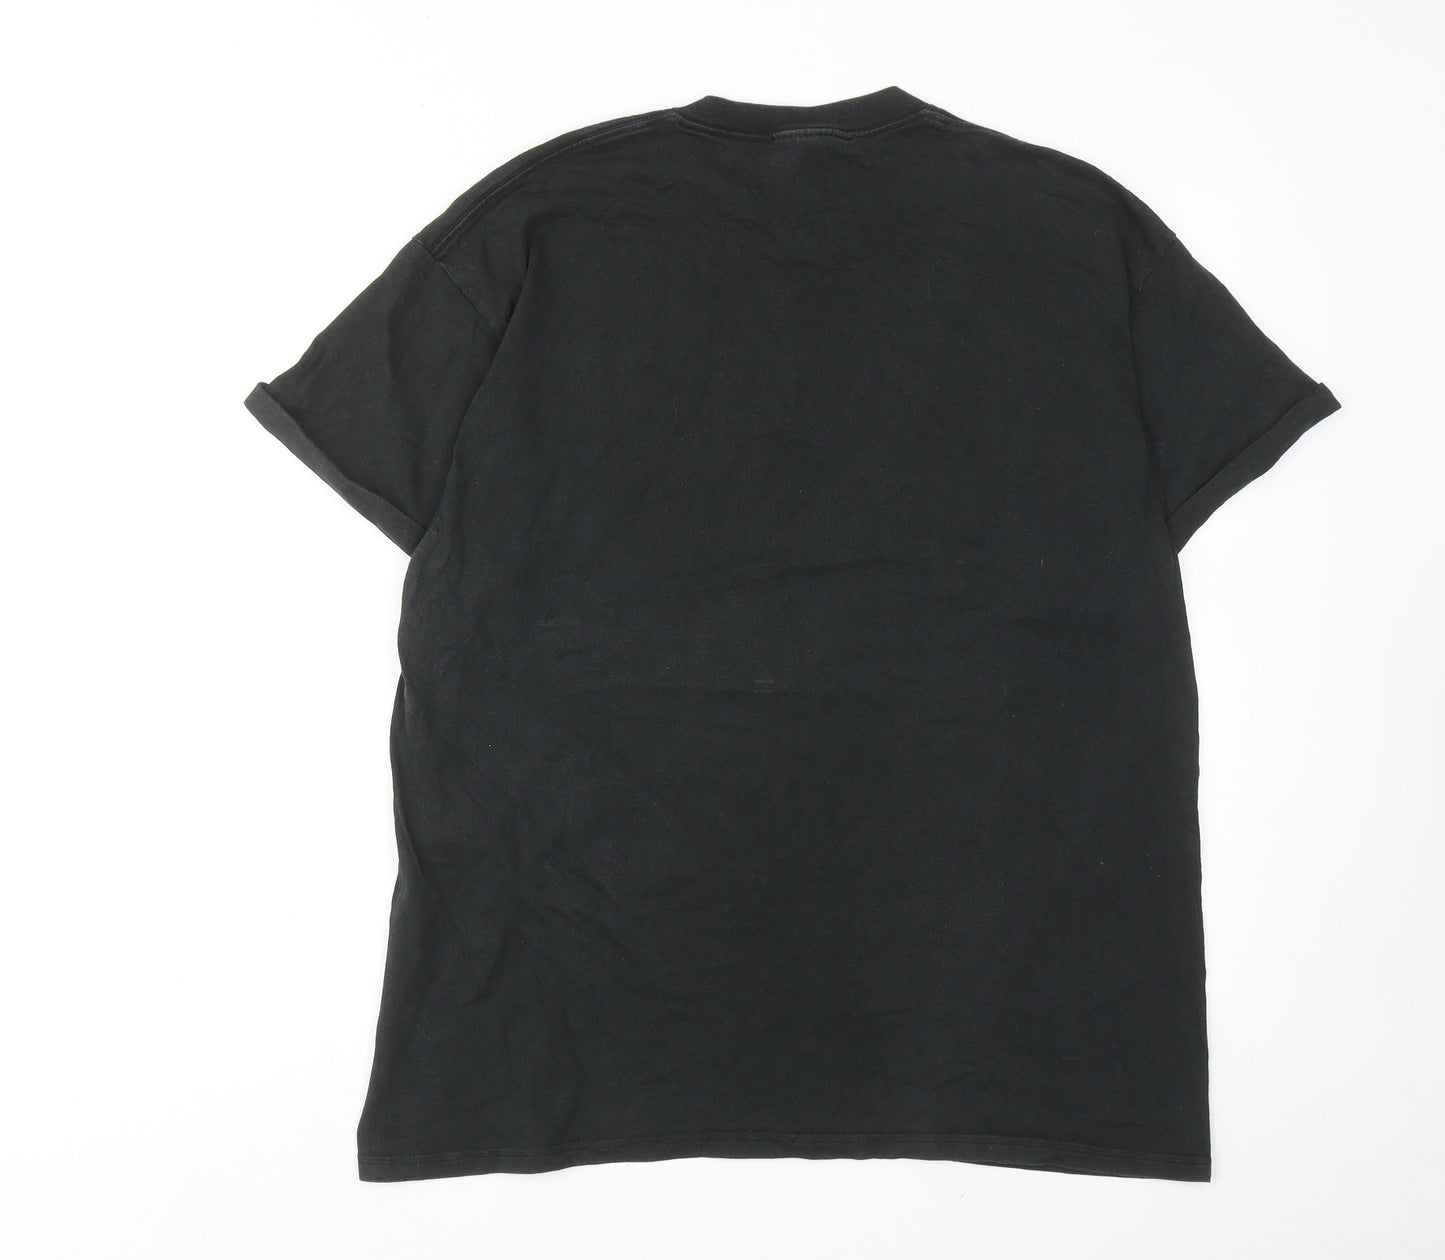 Nike Mens Black Cotton T-Shirt Size L Round Neck